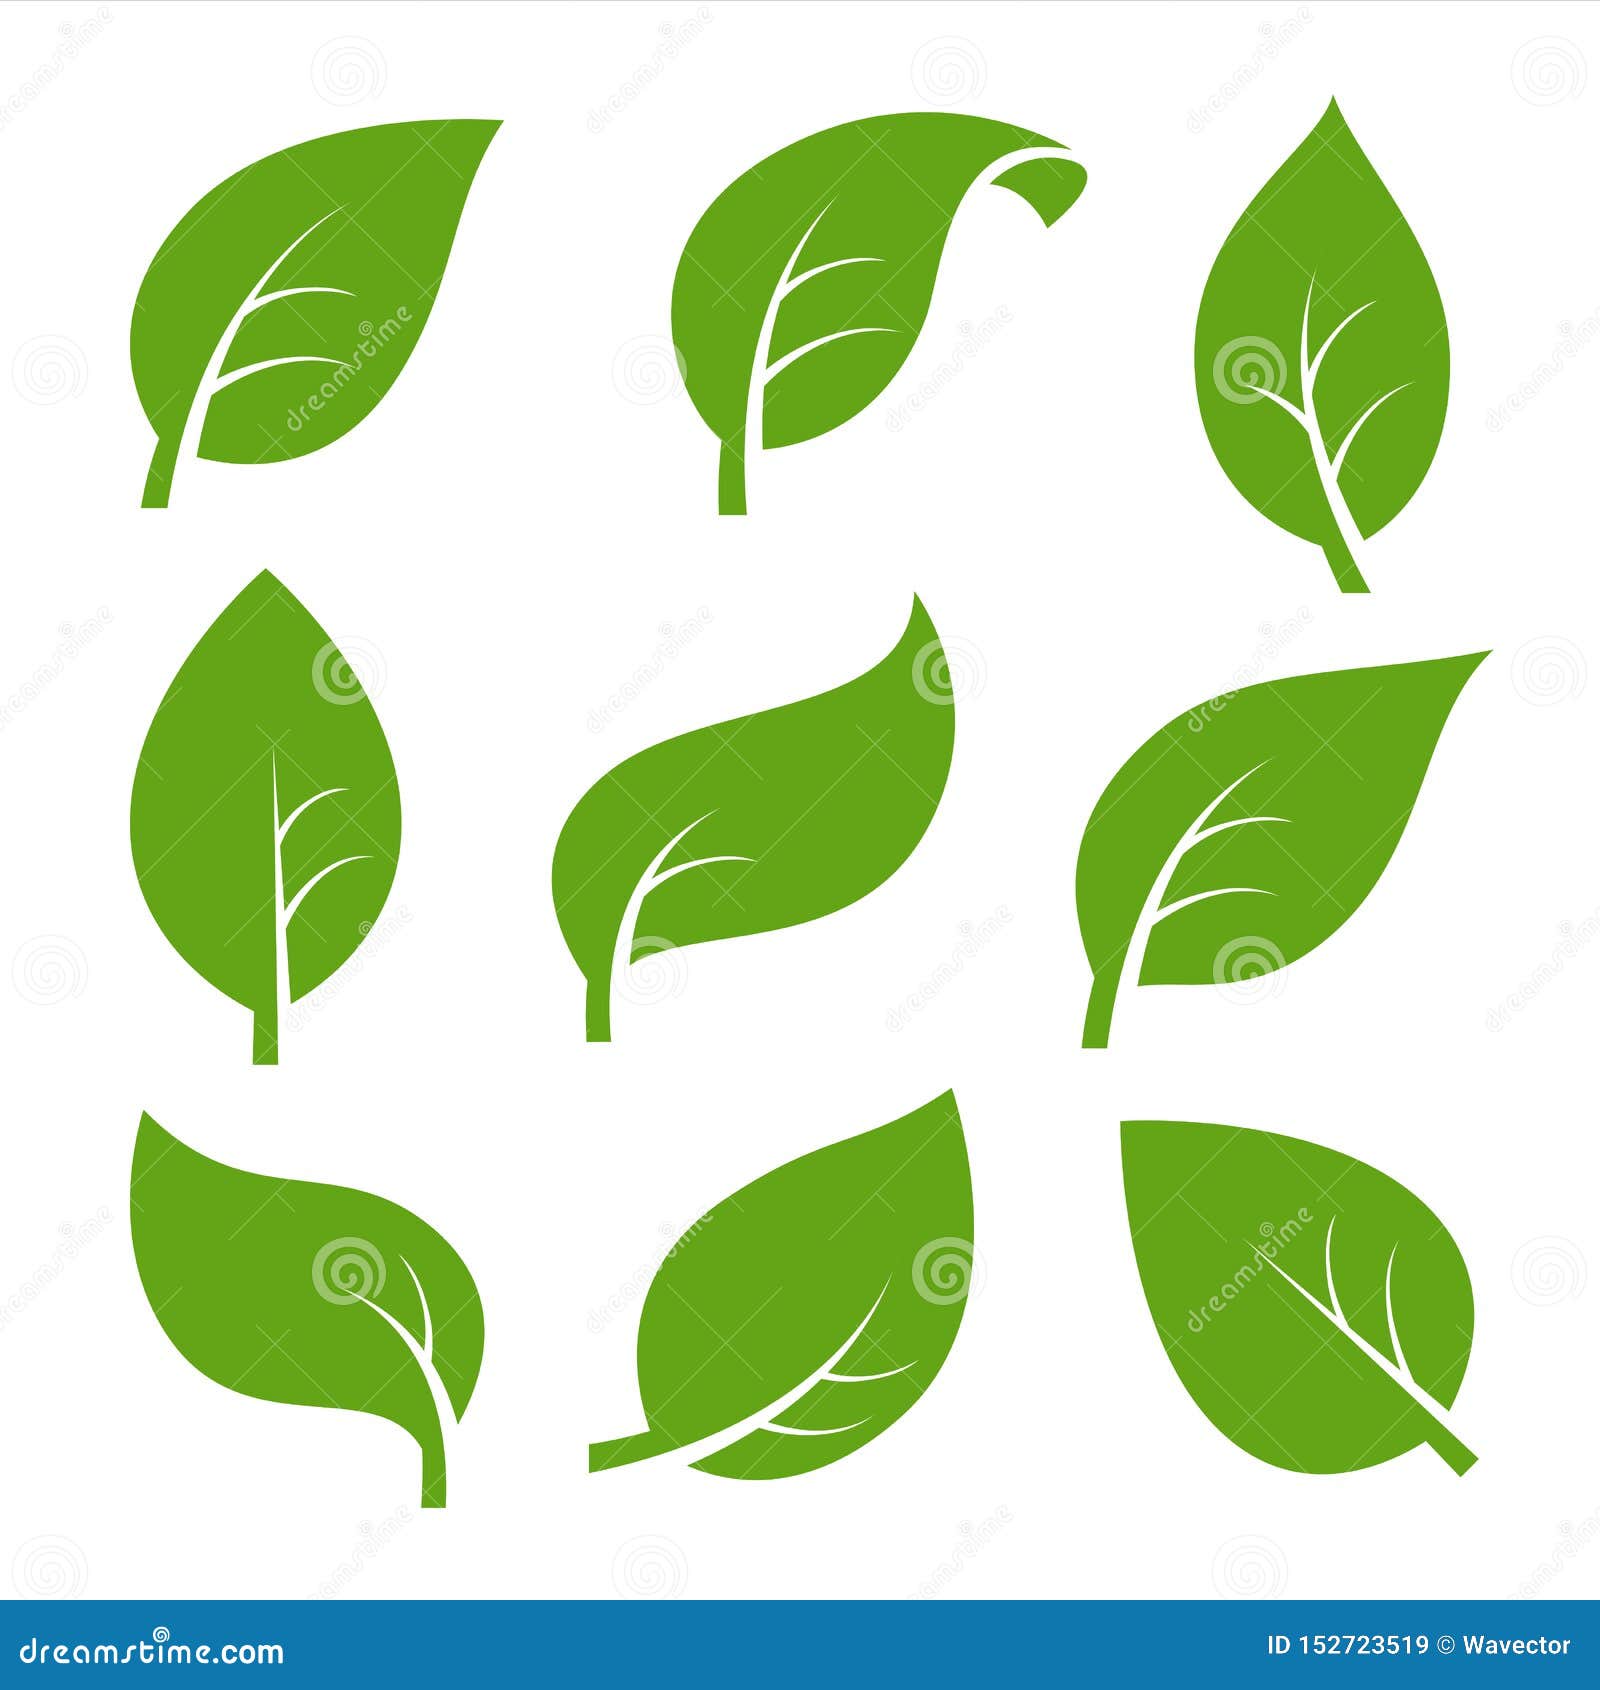 eco nature green color leaf  logo flat icon set